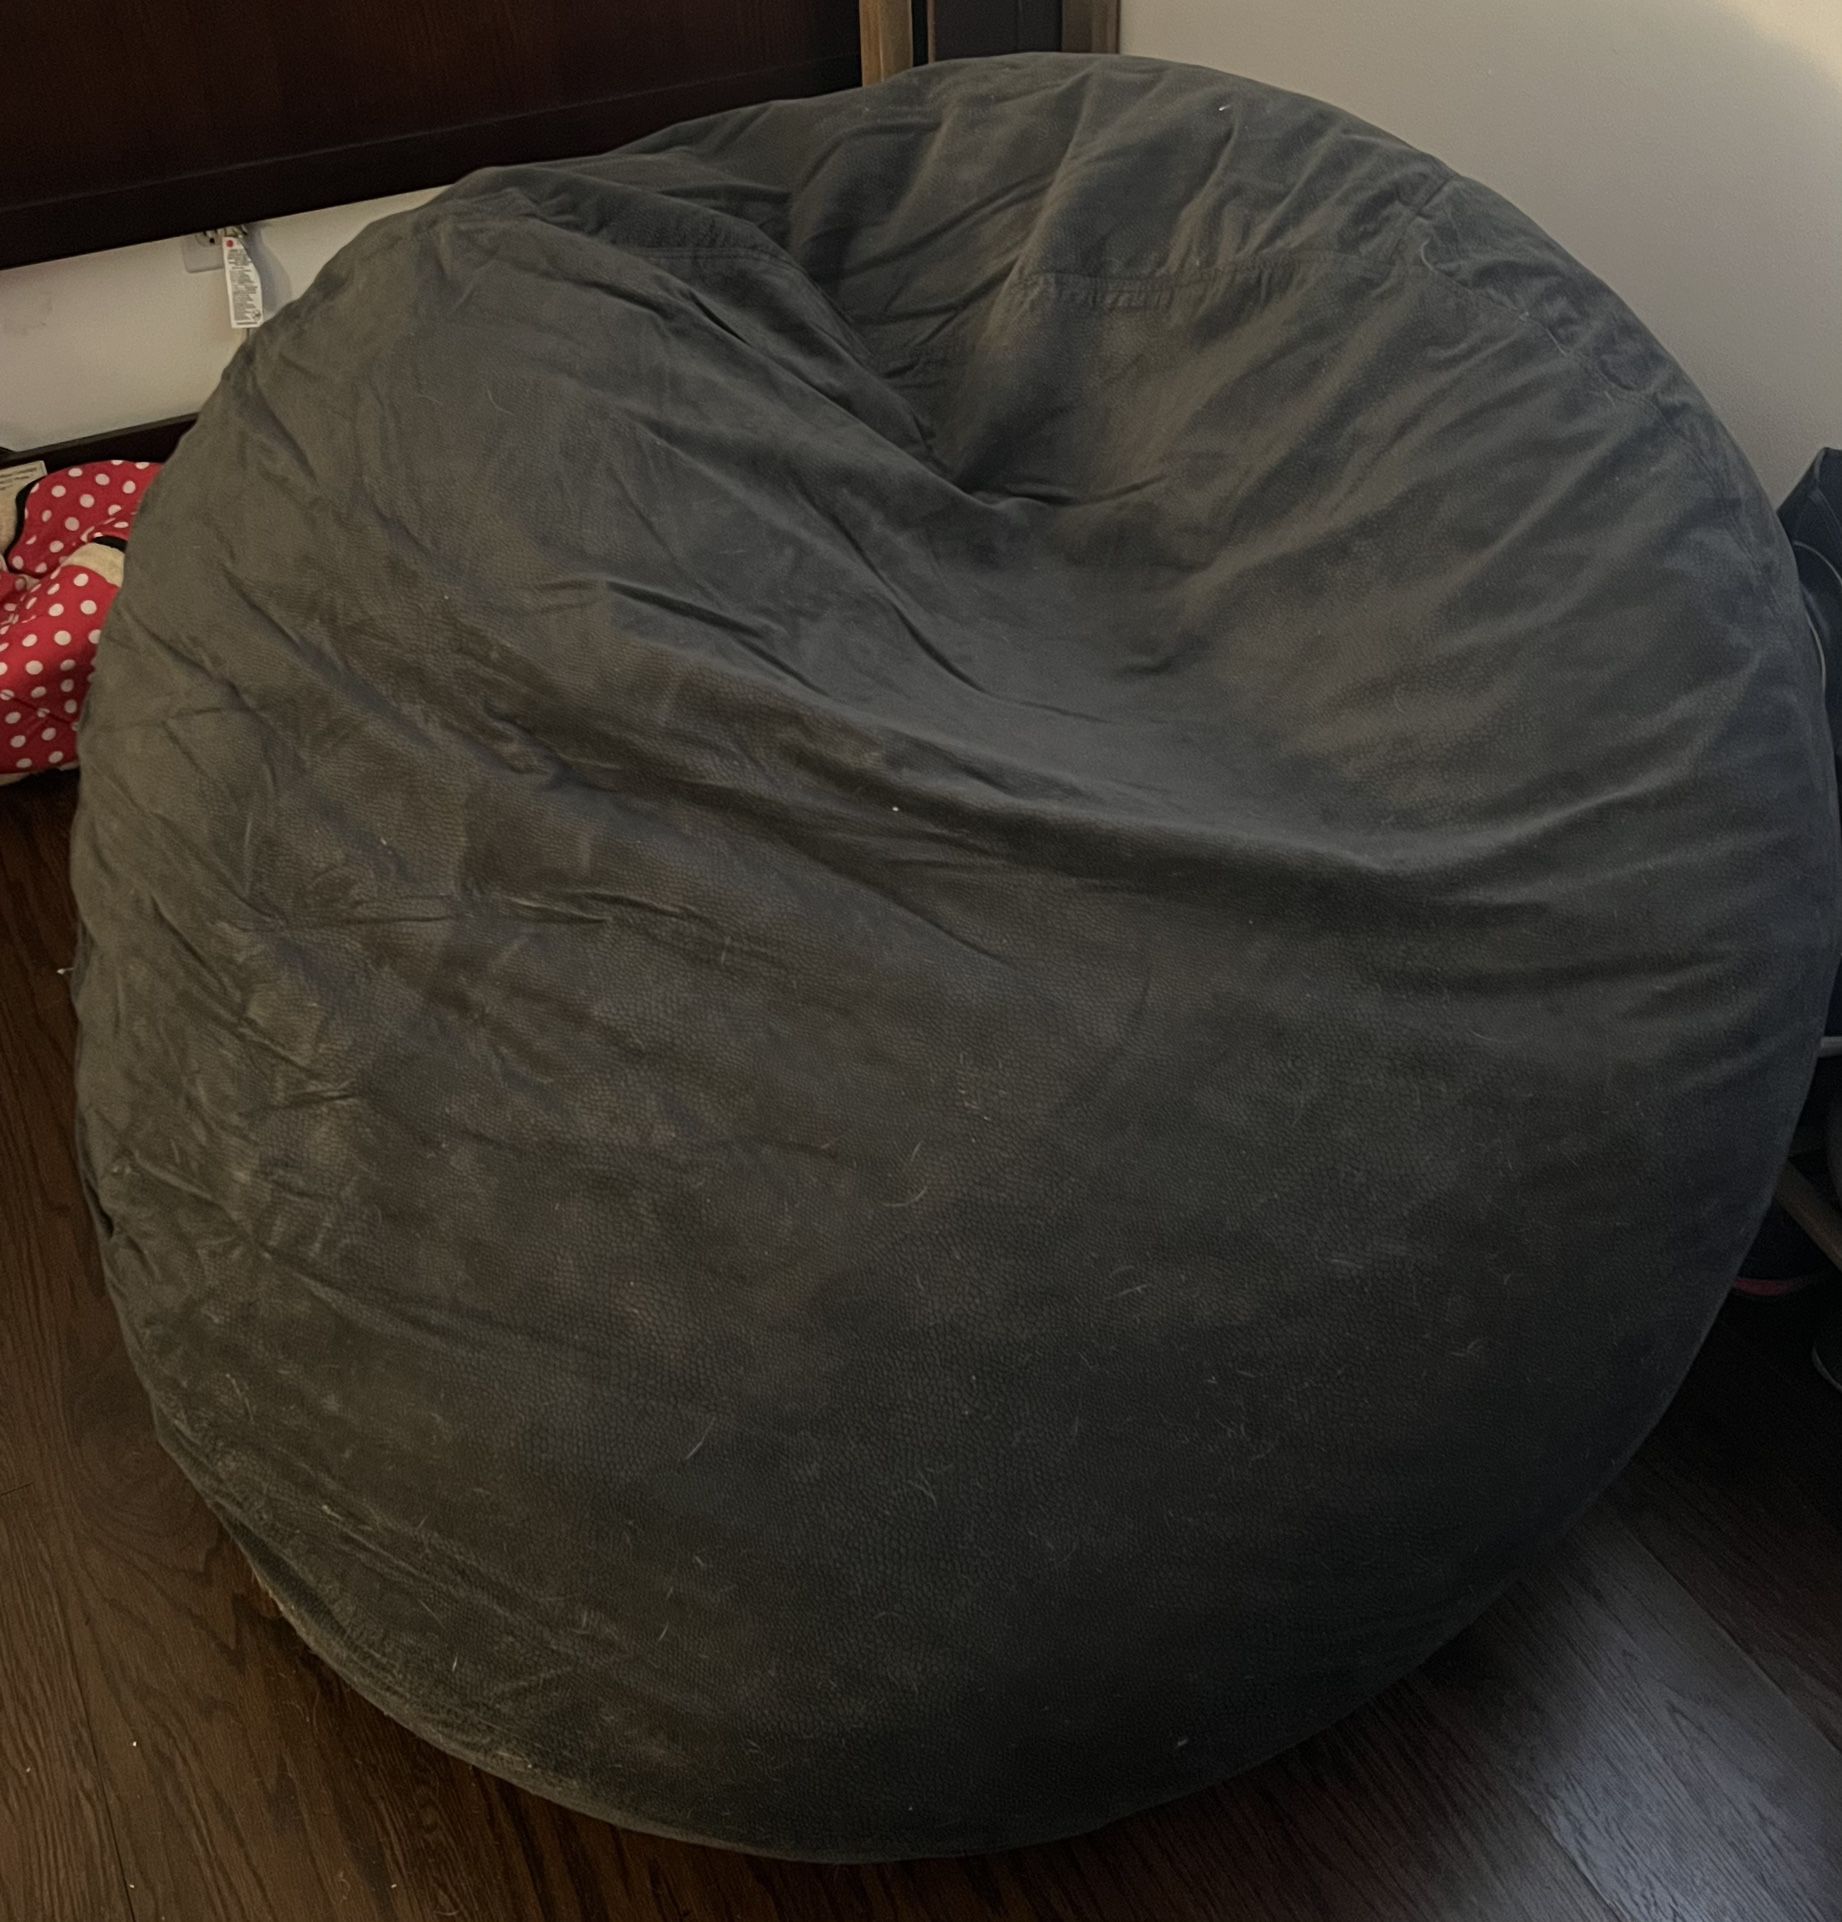 Chill Sack Bean Bag Chair: Giant 5’ Memory Foam Bean Bag In Gray